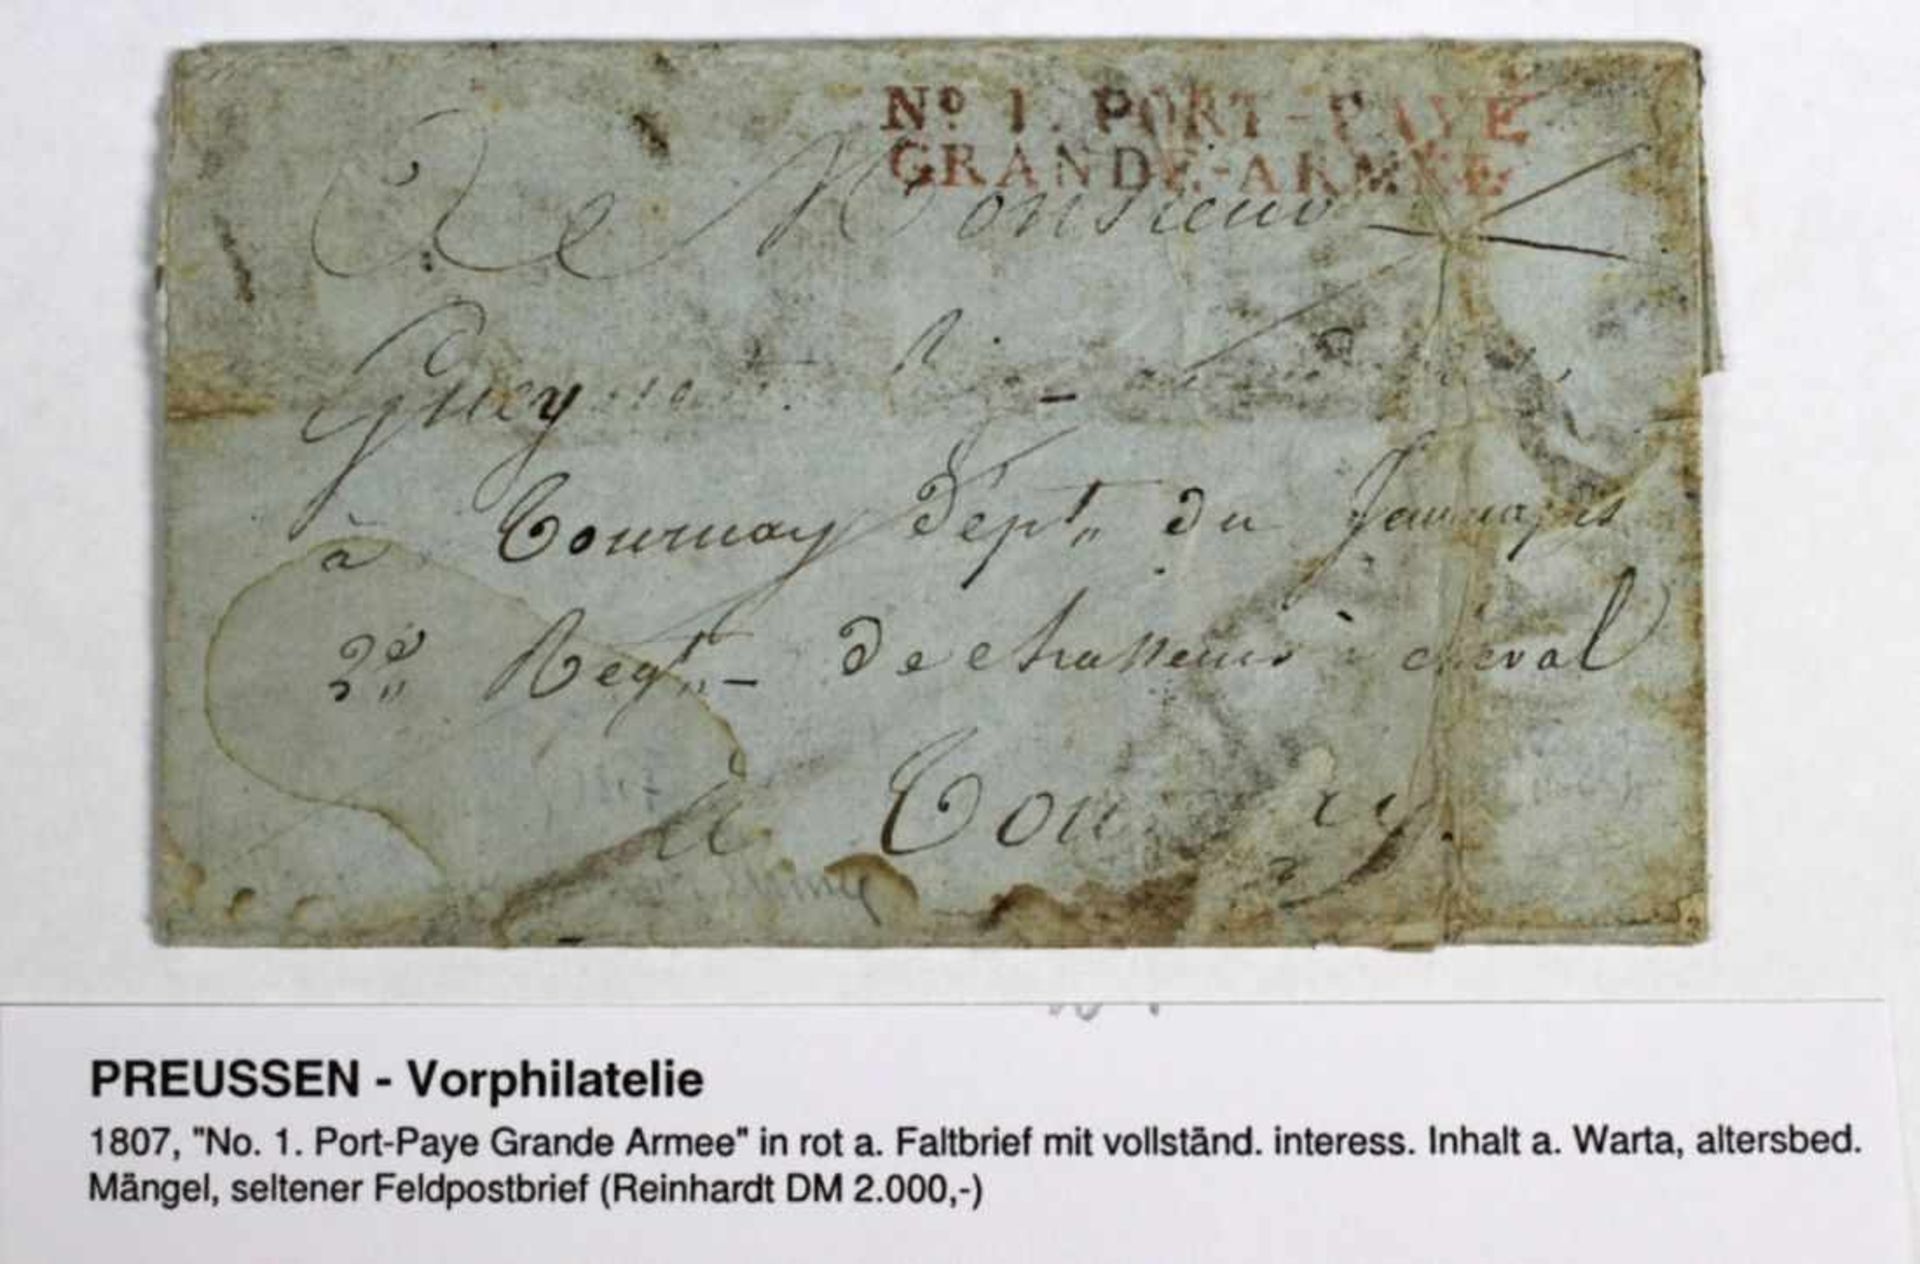 Vorphilatelie, Preussen, 1807, seltener Feldpostfrief